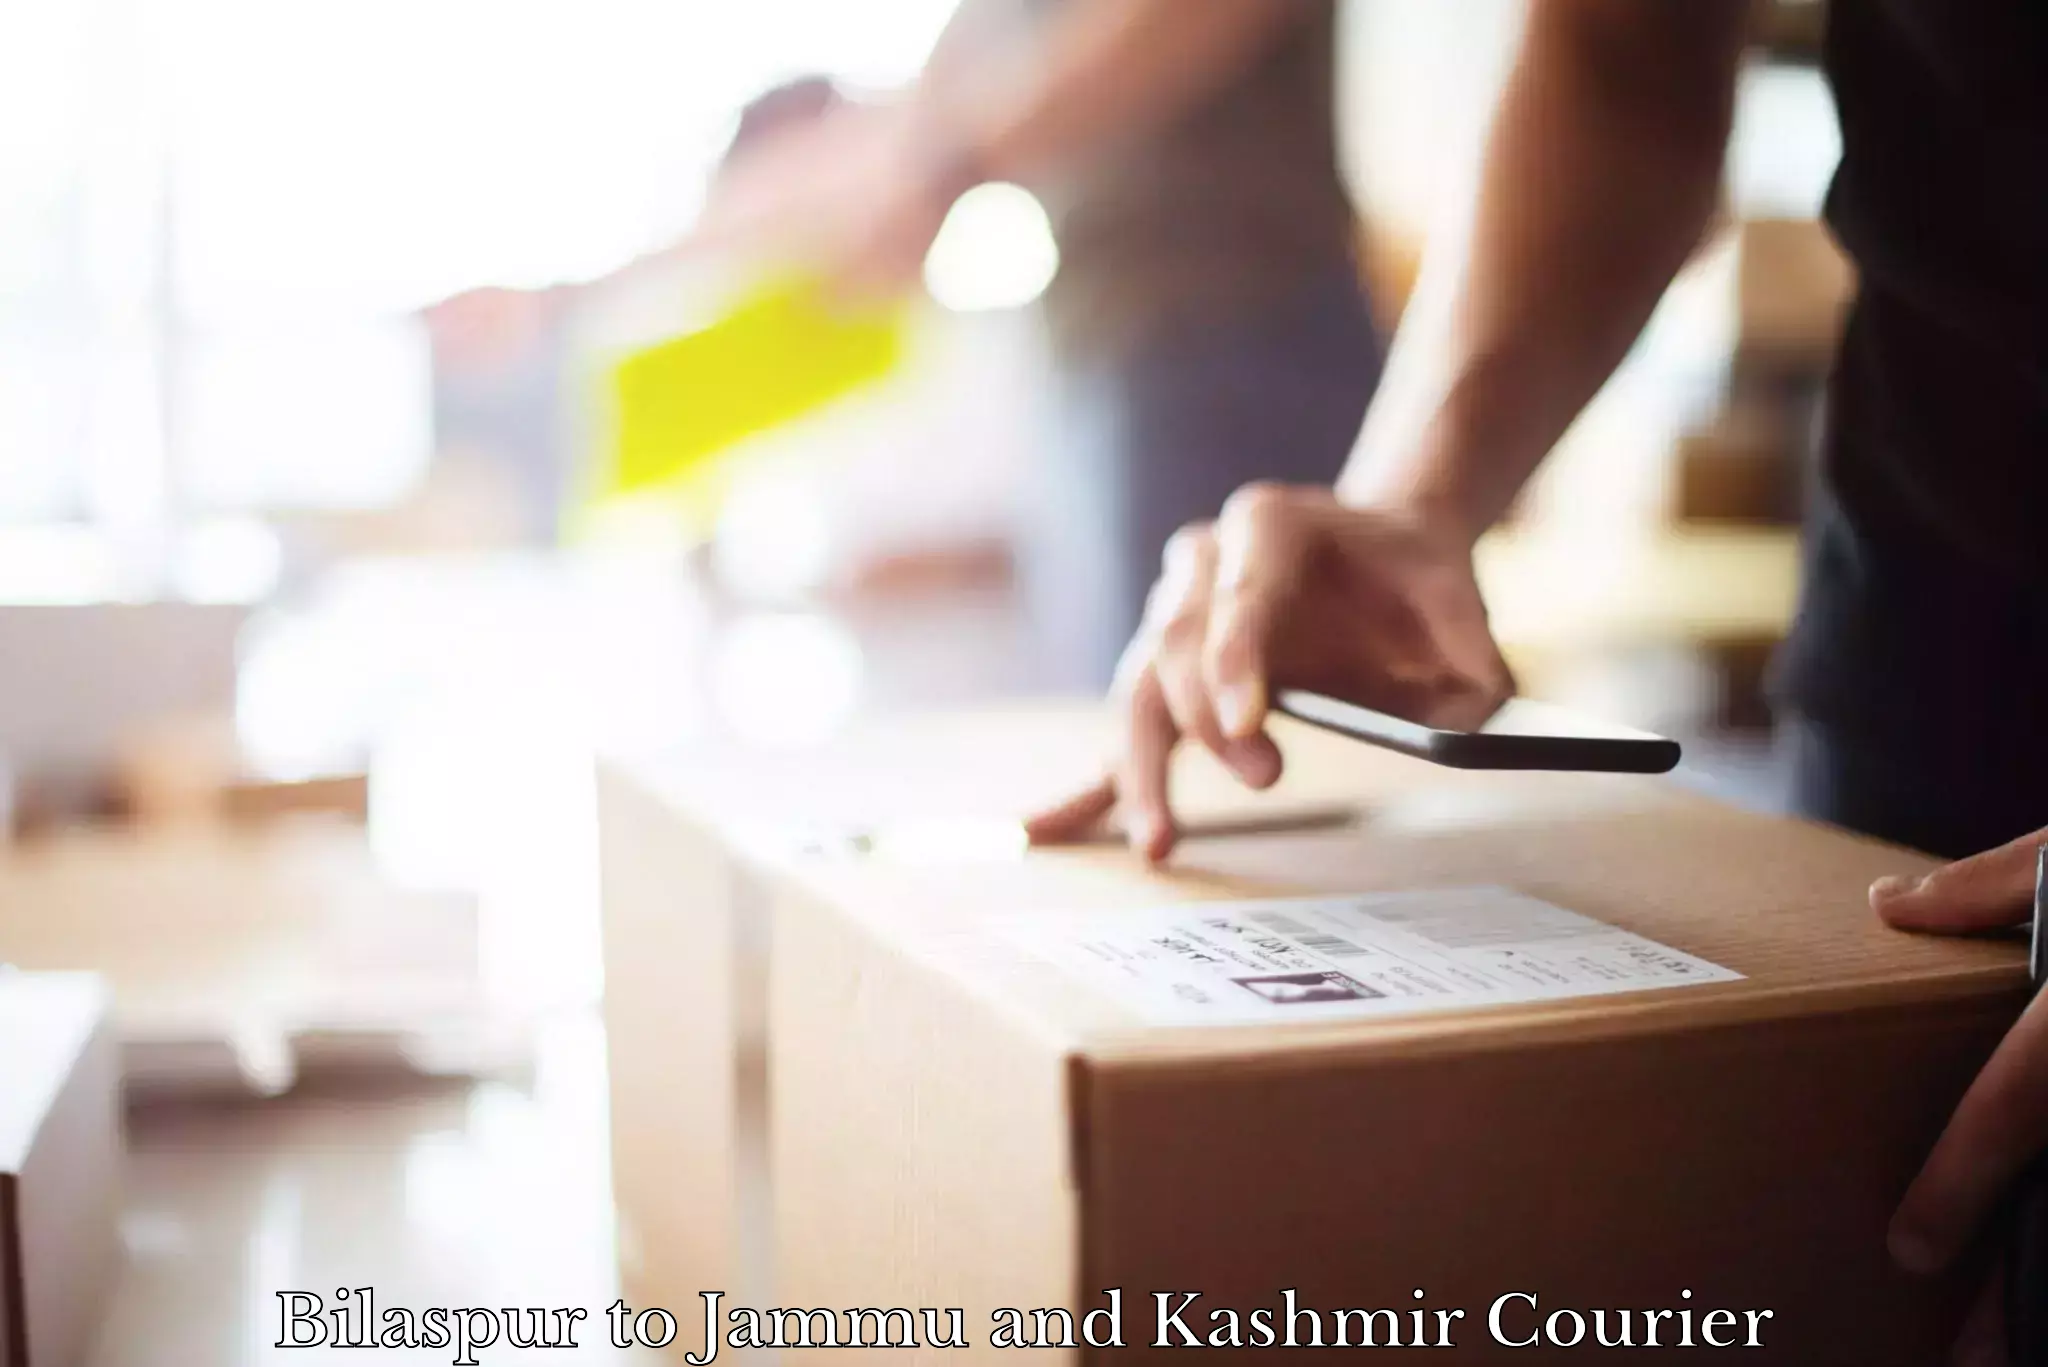 Courier service partnerships Bilaspur to Jammu and Kashmir